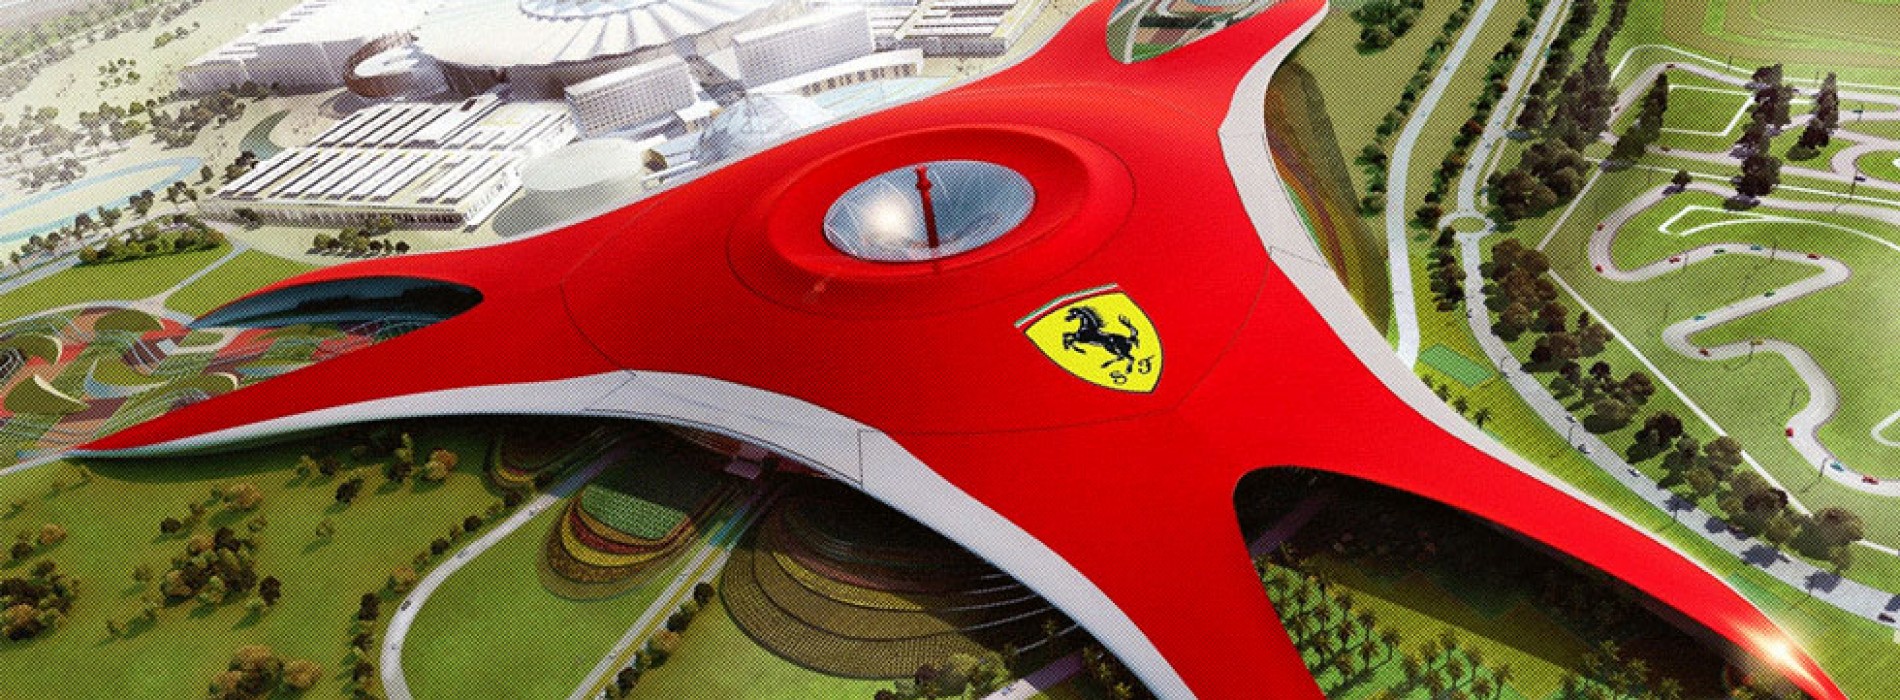 Ferrari World Abu Dhabi Spreads the Ferrari Spirit to Public this Ramadan